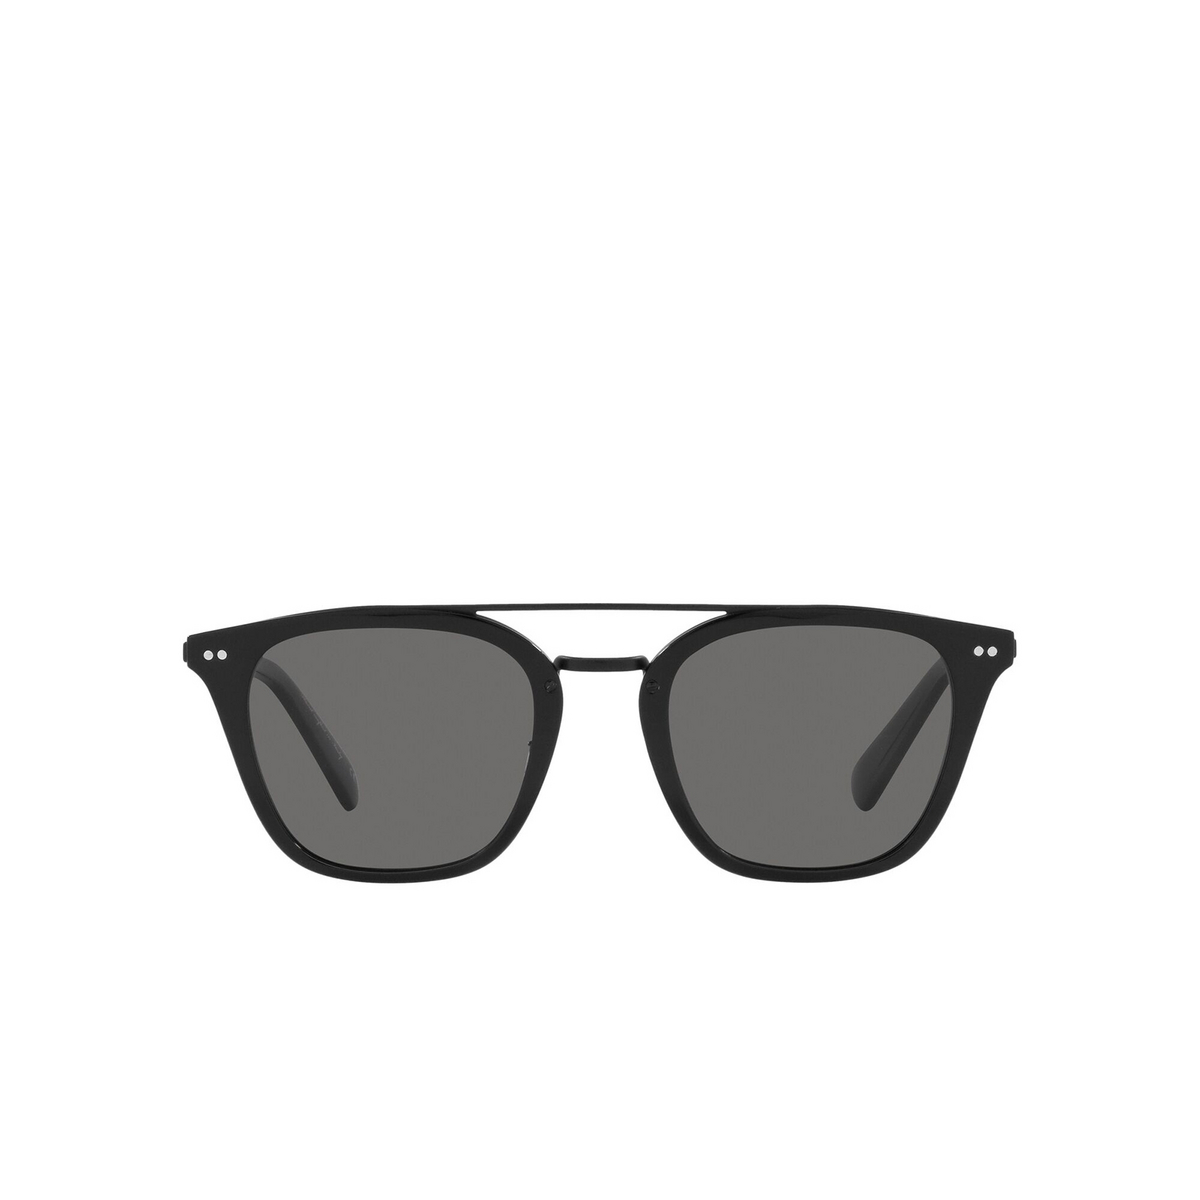 Oliver Peoples® Rectangle Sunglasses: Frère La OV5461SU color Black 100581 - front view.